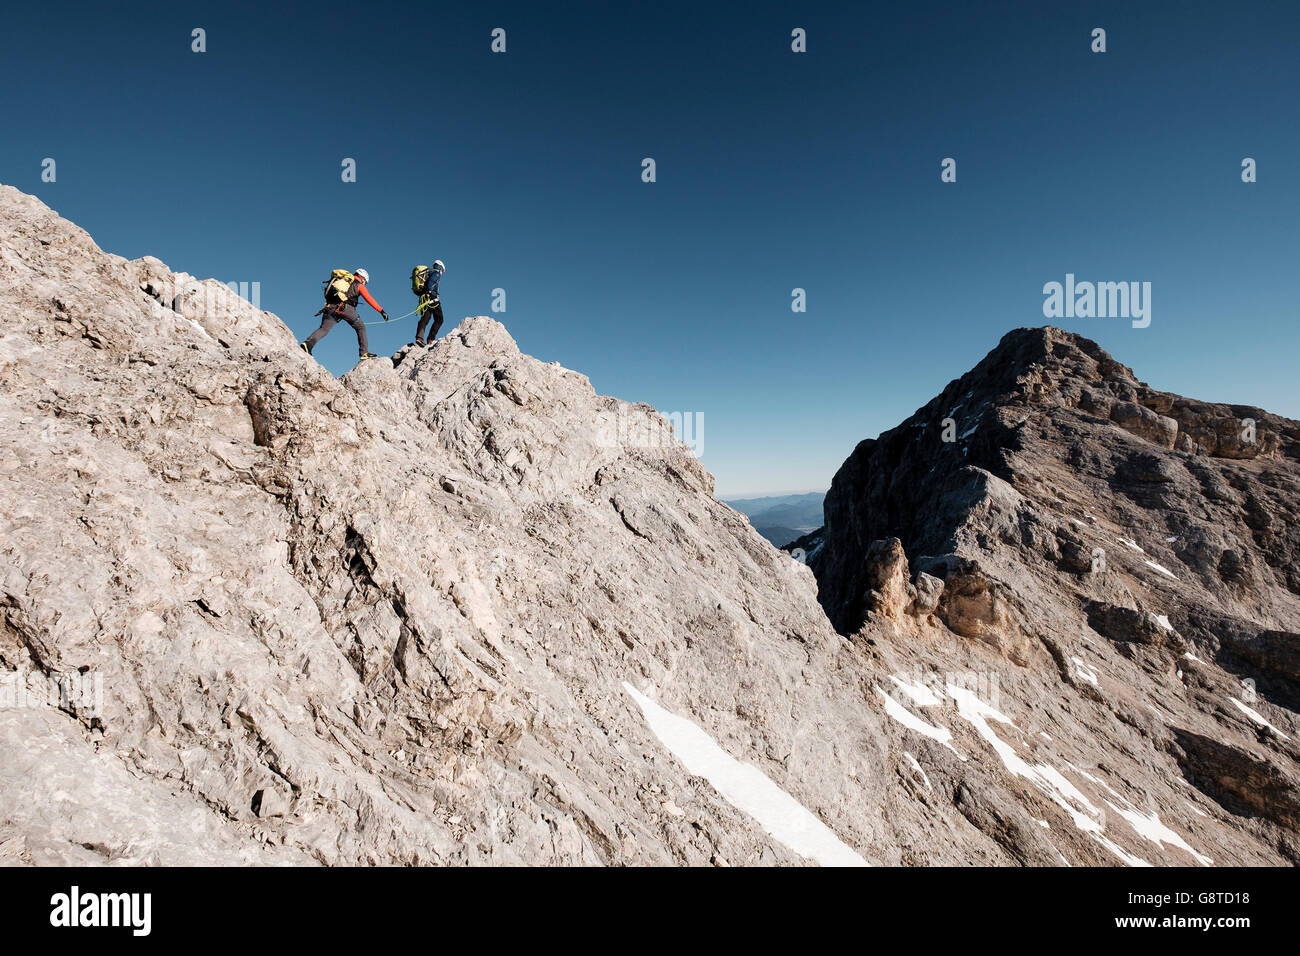 Two mountaineers hiking on mountain peak in European Alps Stock Photo